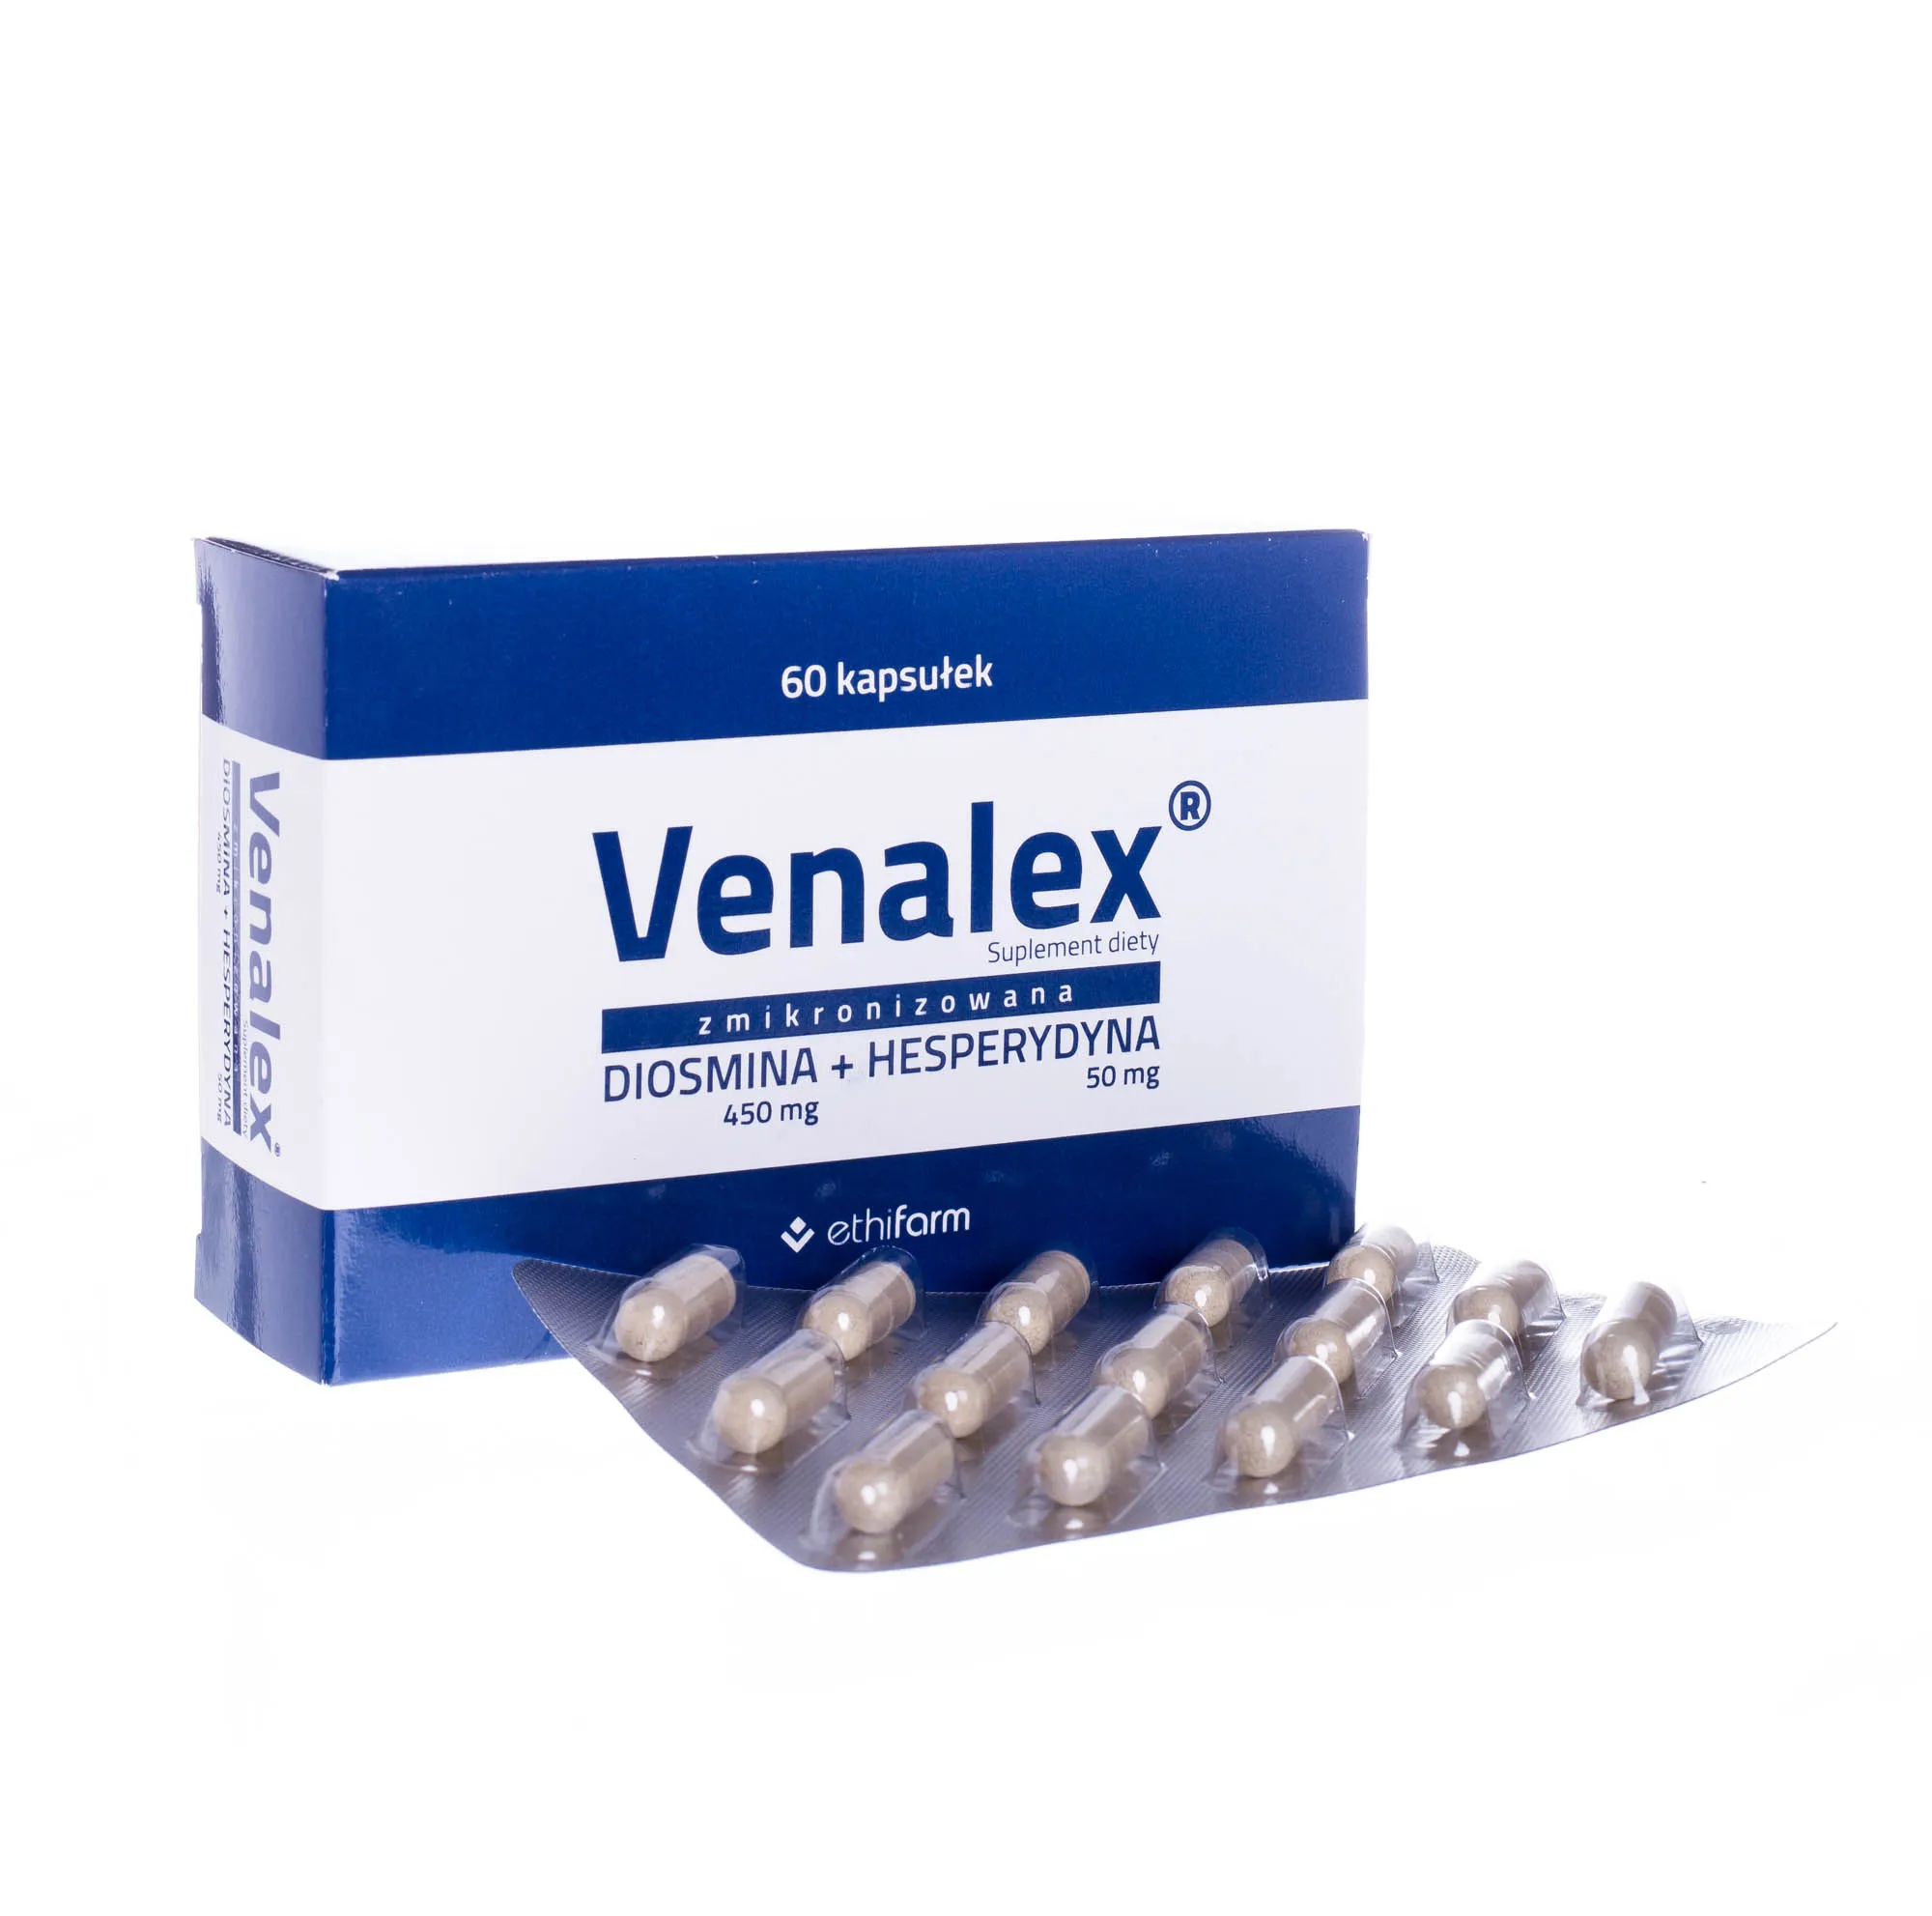 Venalex (zmikronizowana diosmina 450 mg + Hespedryna 50 mg), suplement diety, 60 kapsułek 